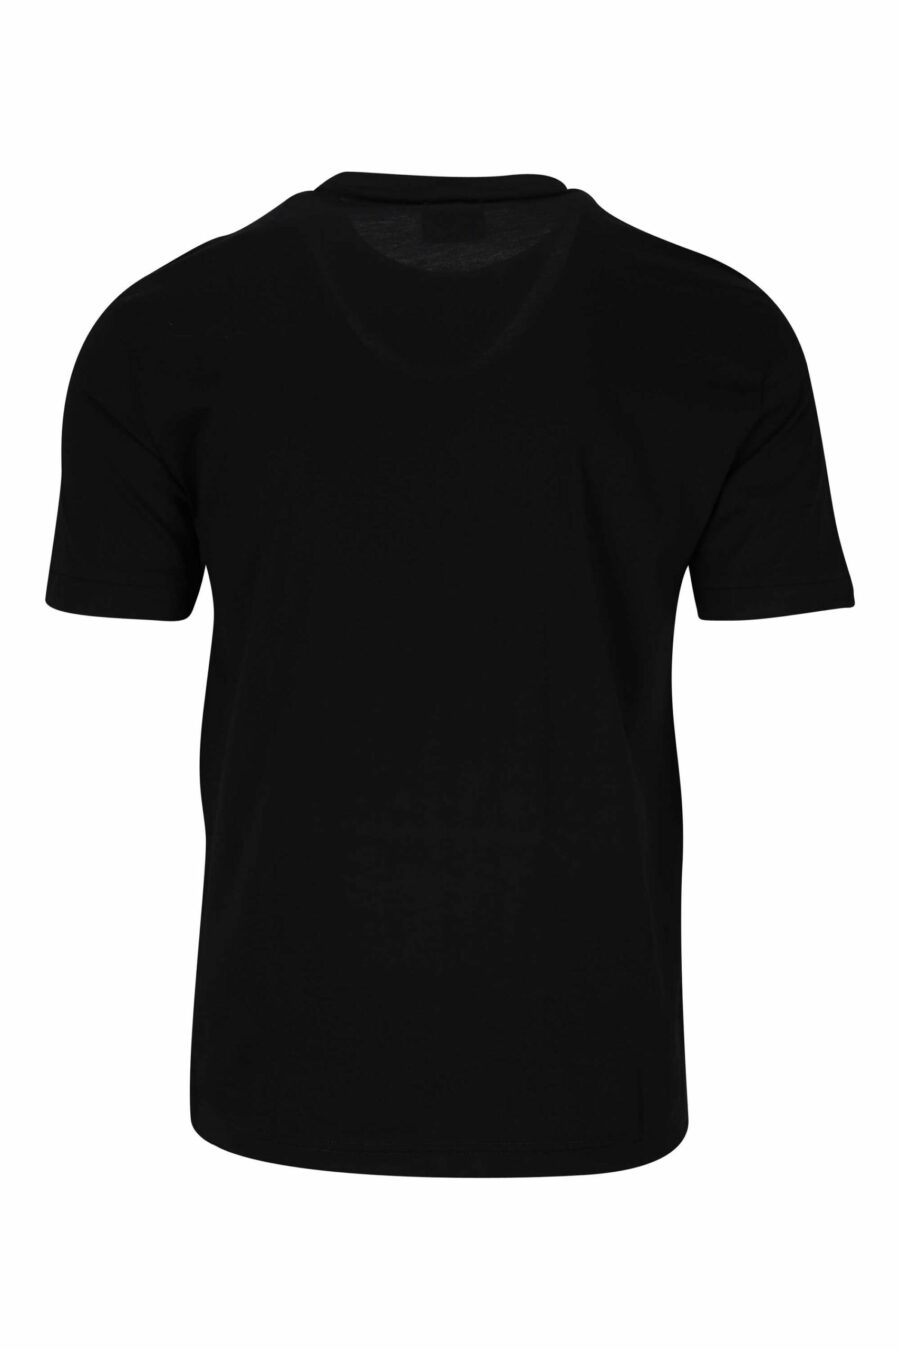 T-shirt preta com mini-logotipo "lux identity" em fita preta - 8058947490189 1 scaled